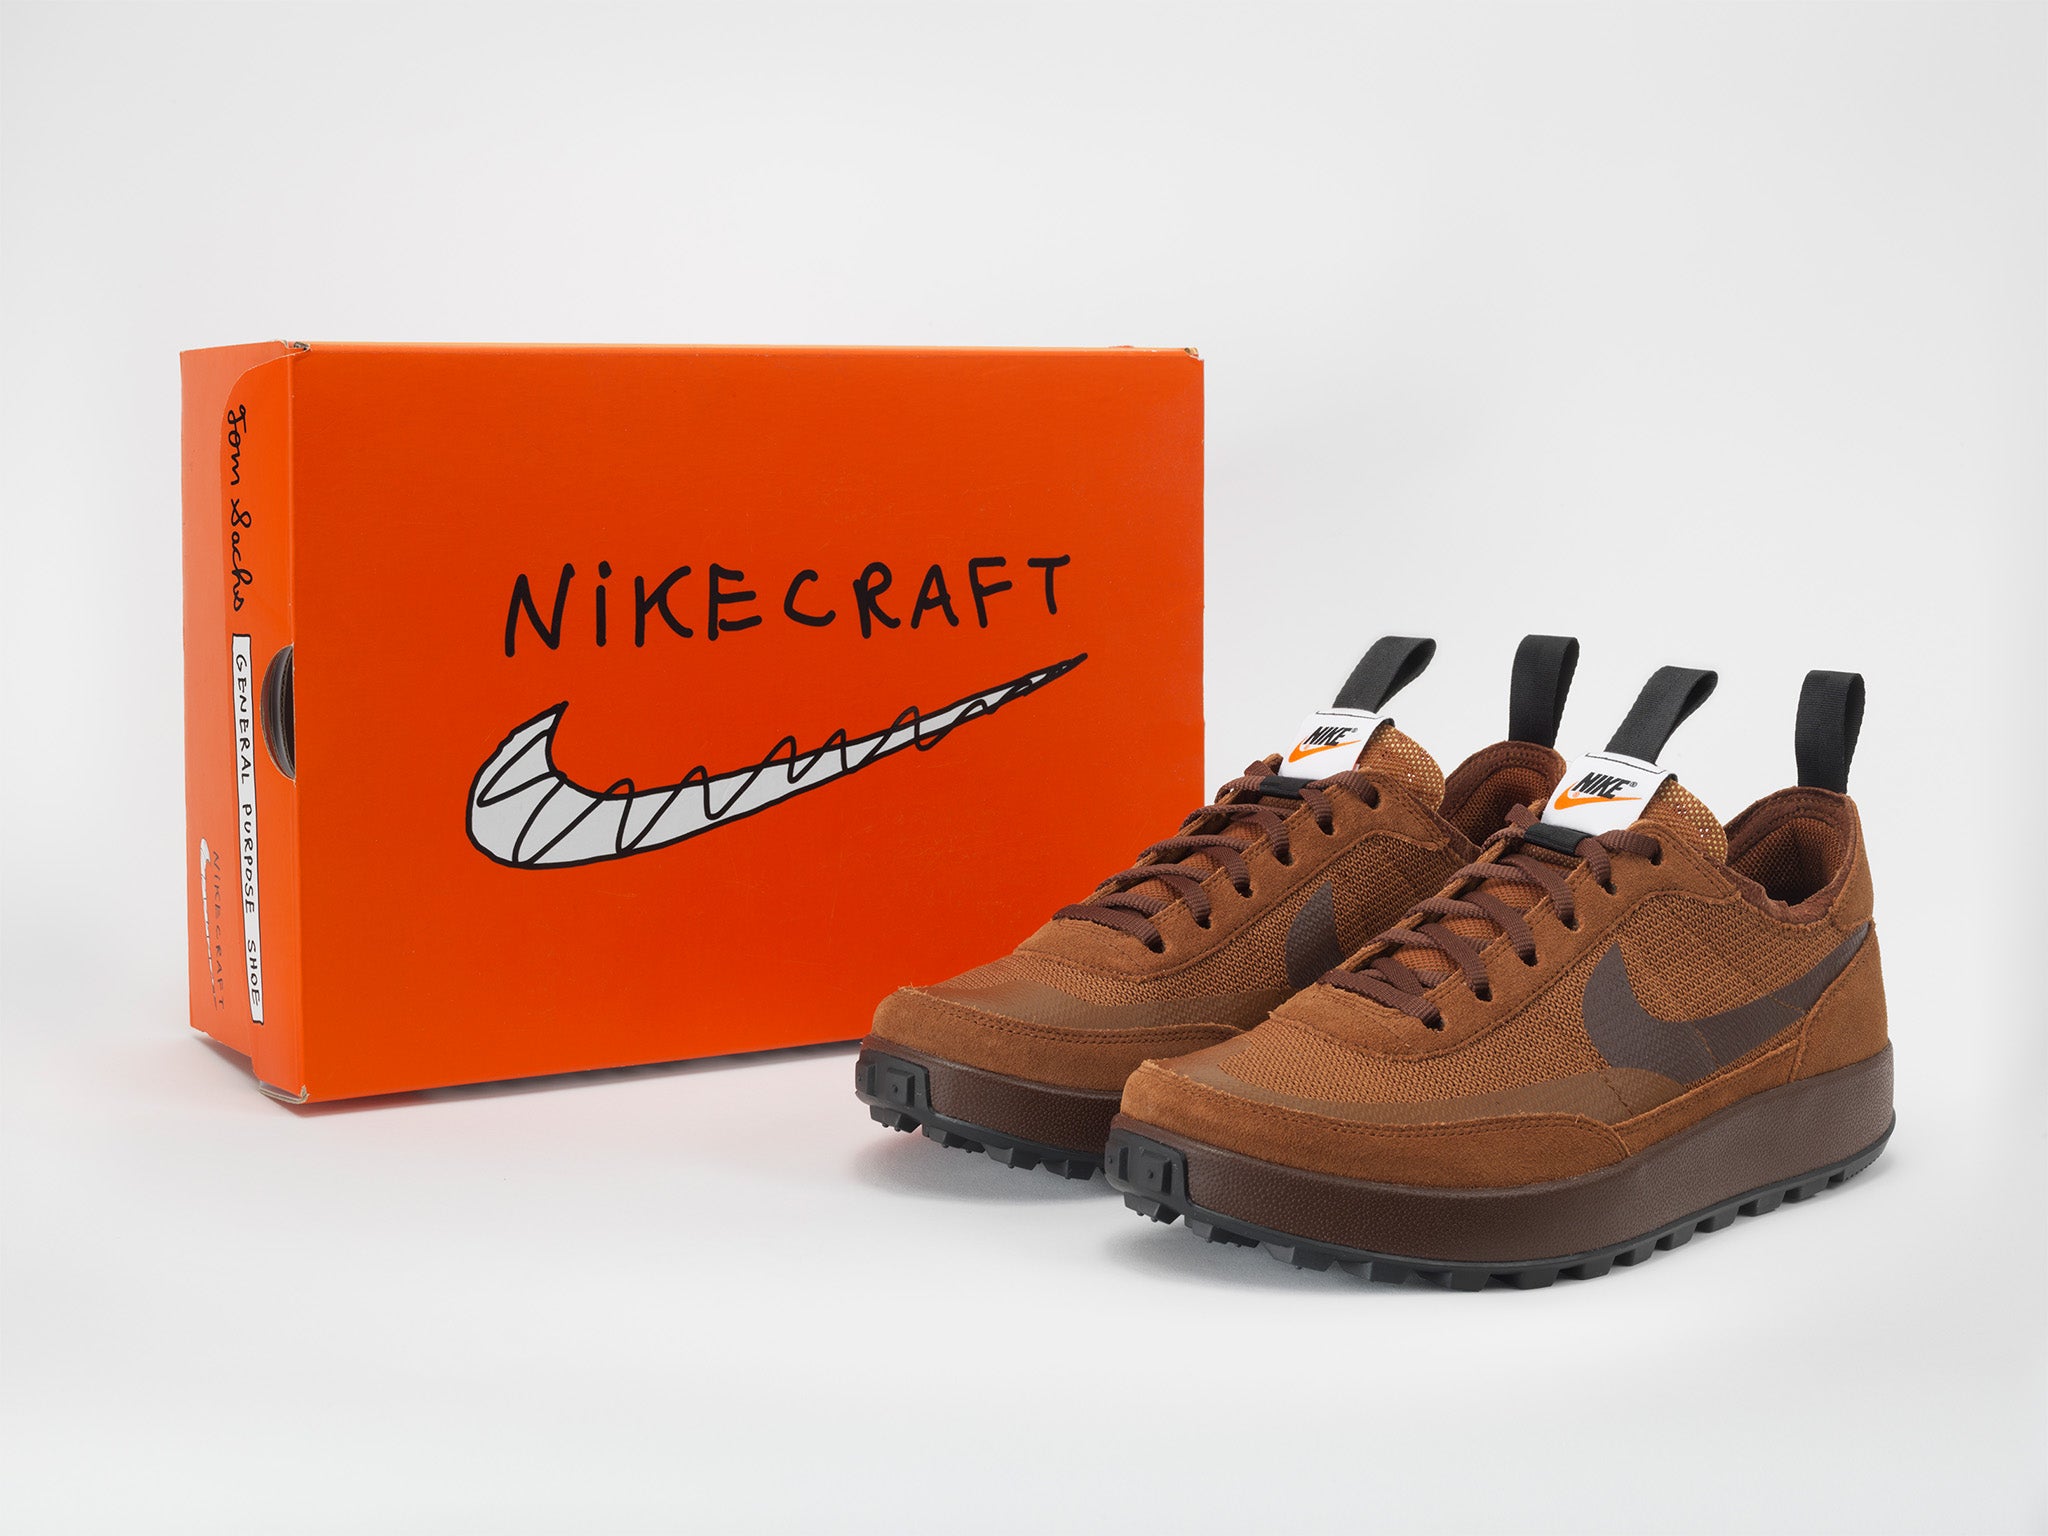 Tom Sachs x NikeCraft General Purpose Shoe Brown First Look